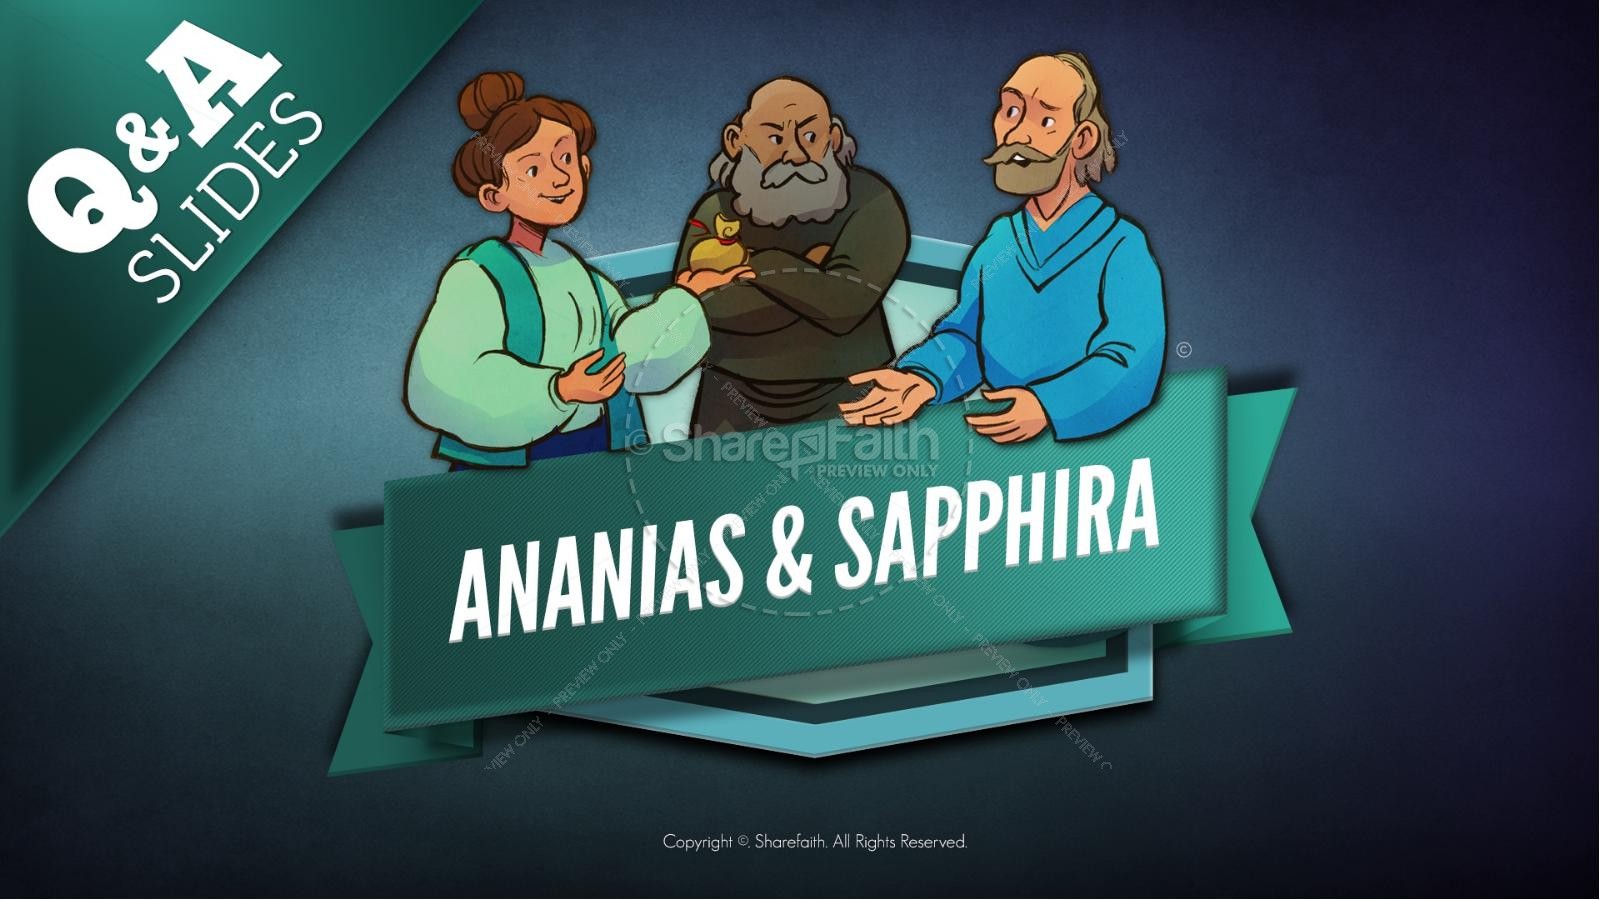 Acts 5 Ananias and Sapphira Kids Bible Stories